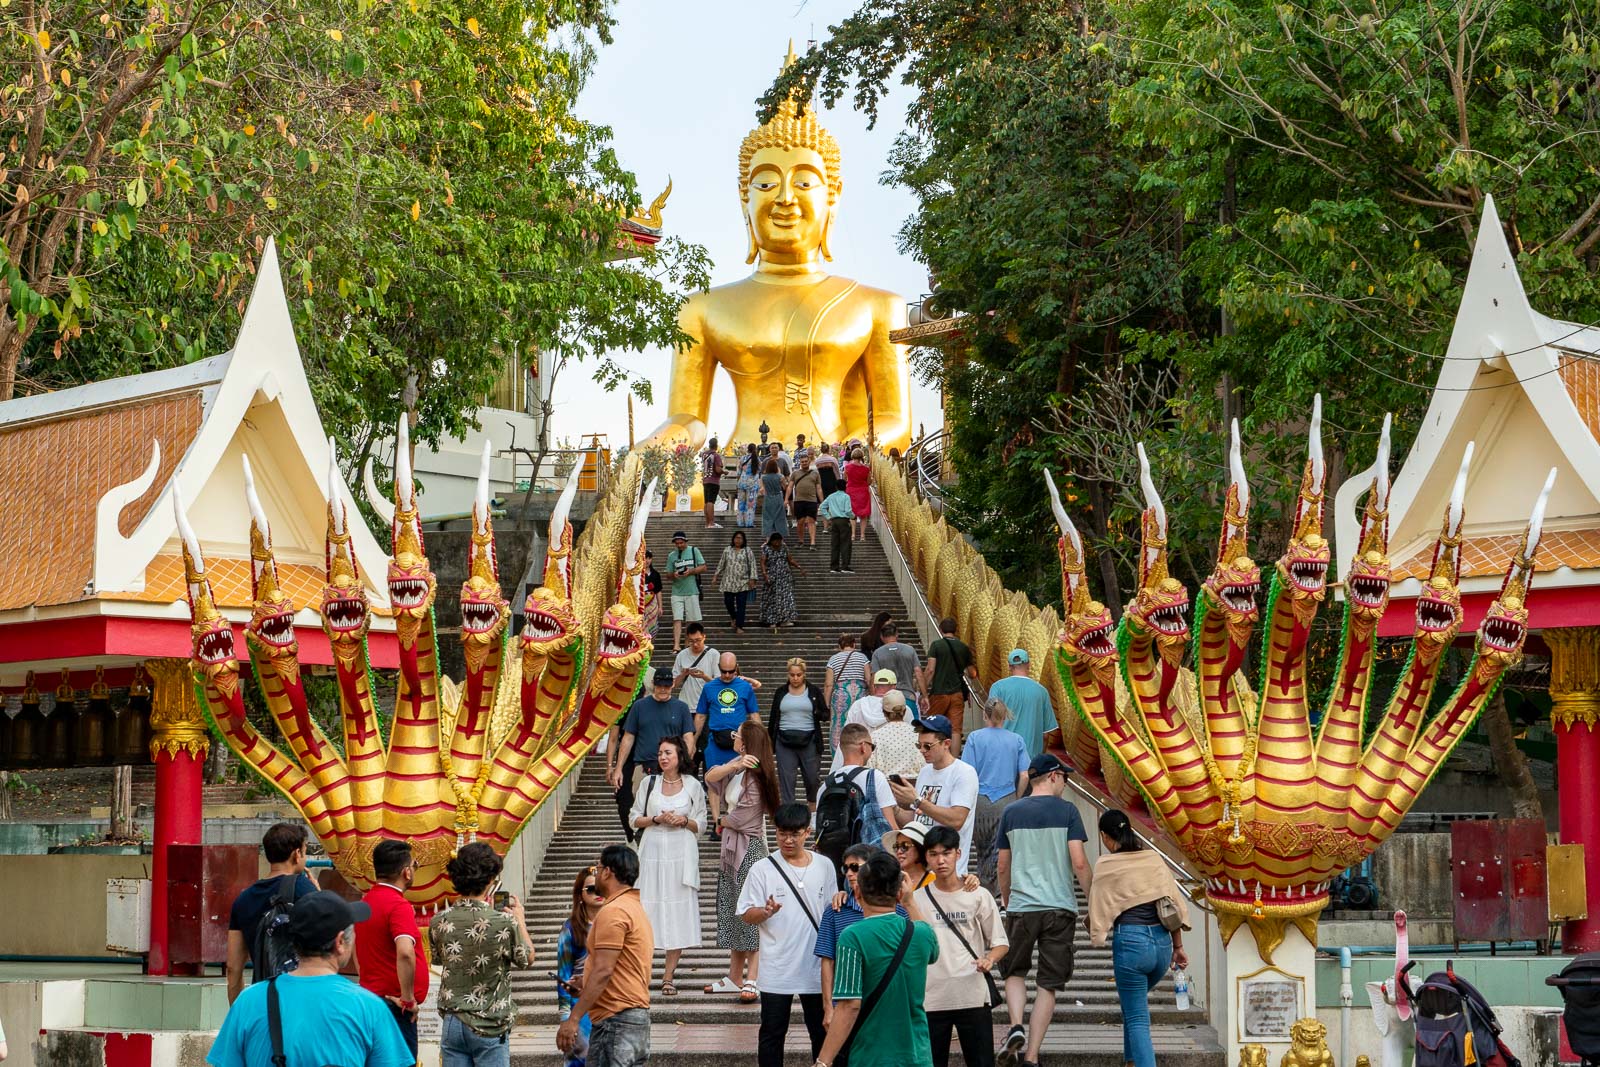 Things to do in Pattaya